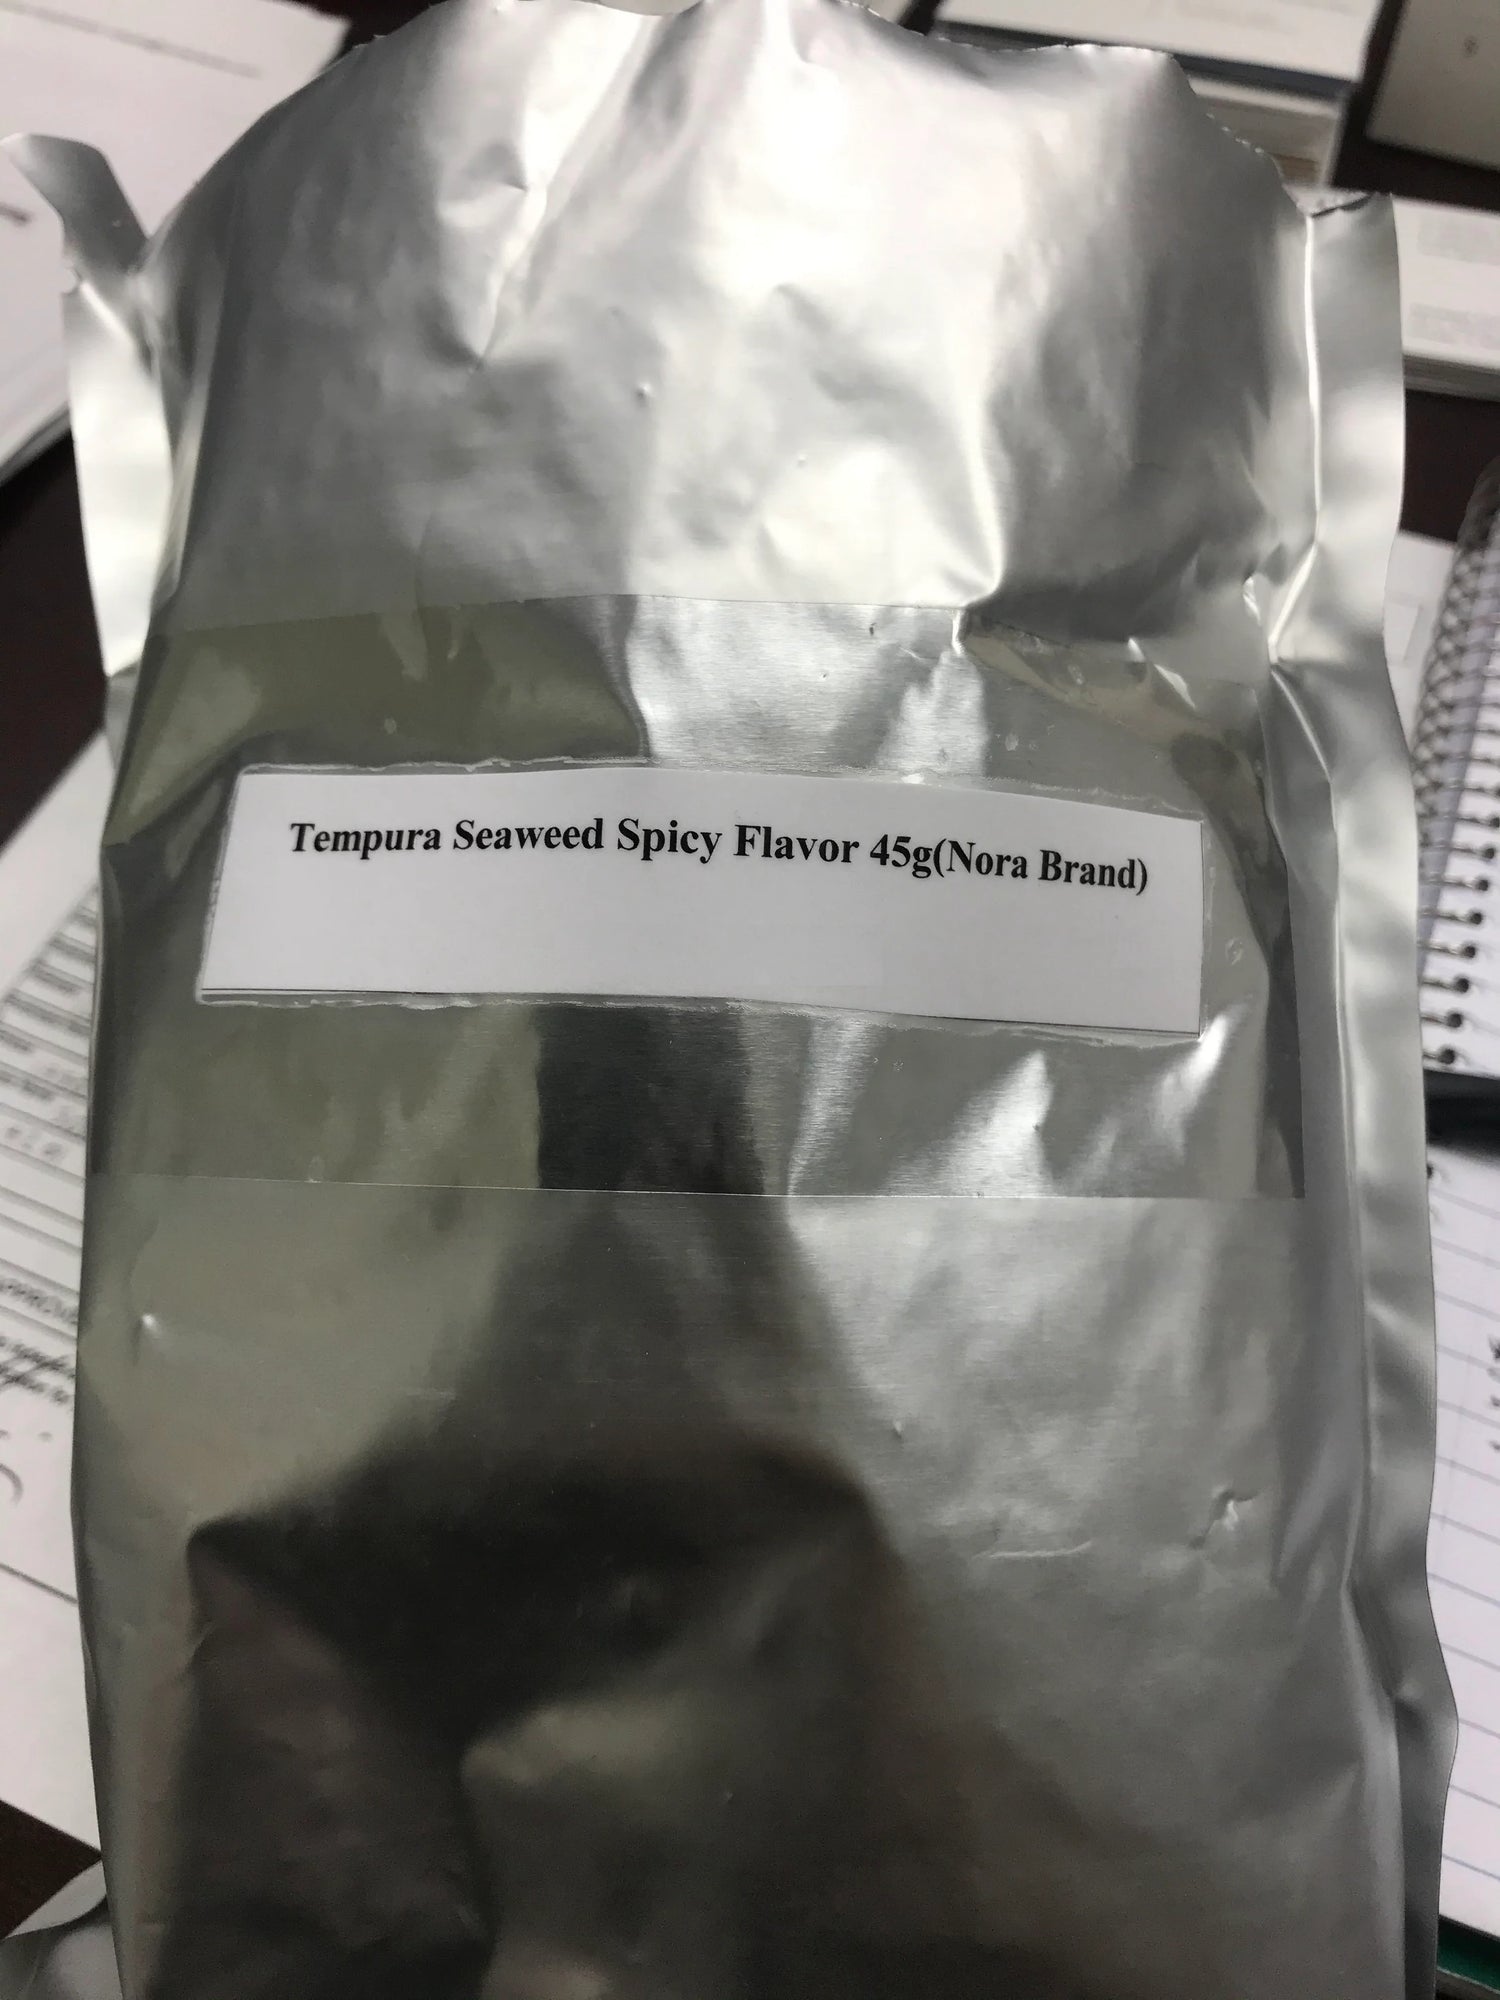 A bag of Tempura Seaweed Spicy Flavor 45g 